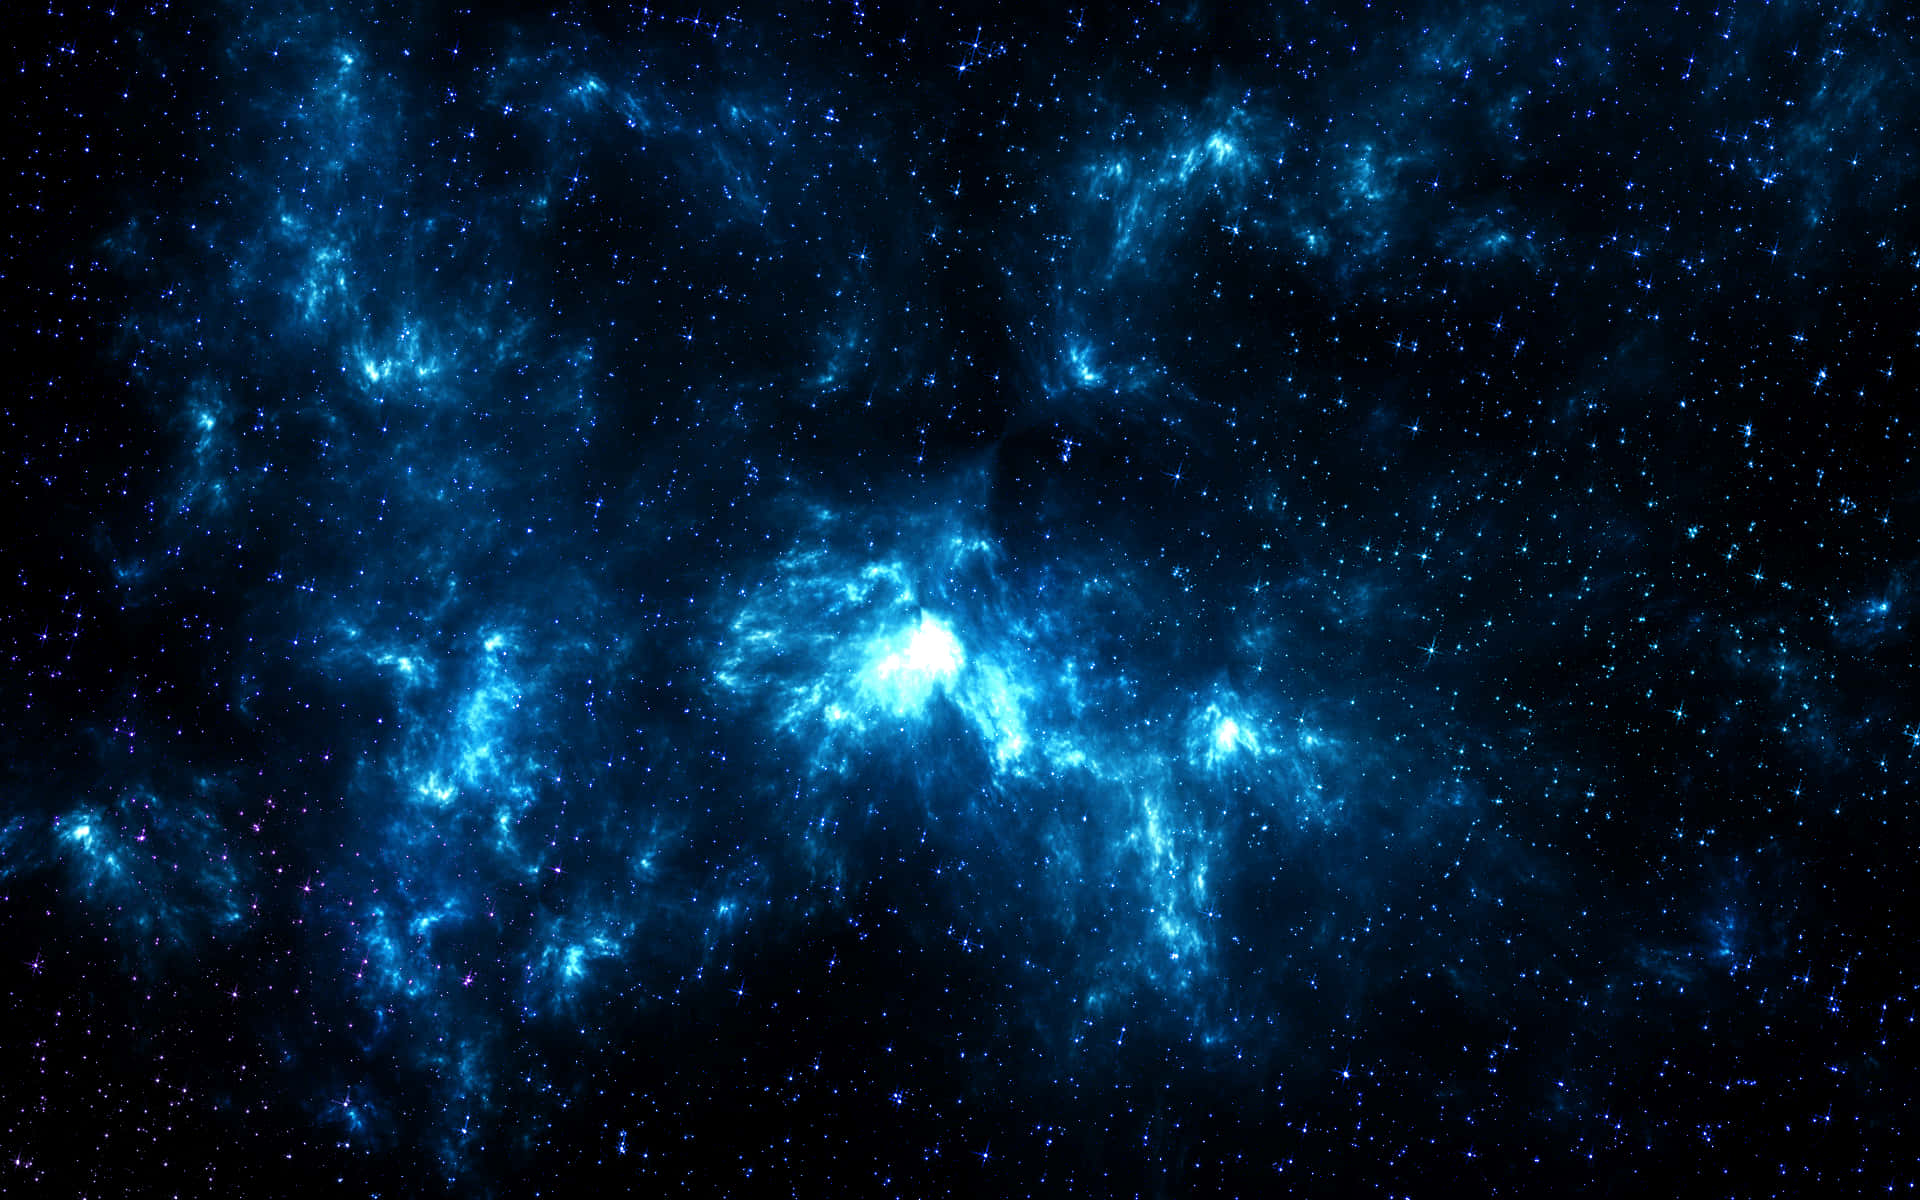 Image  Nebula Spacescape with Mystical Blue Tones